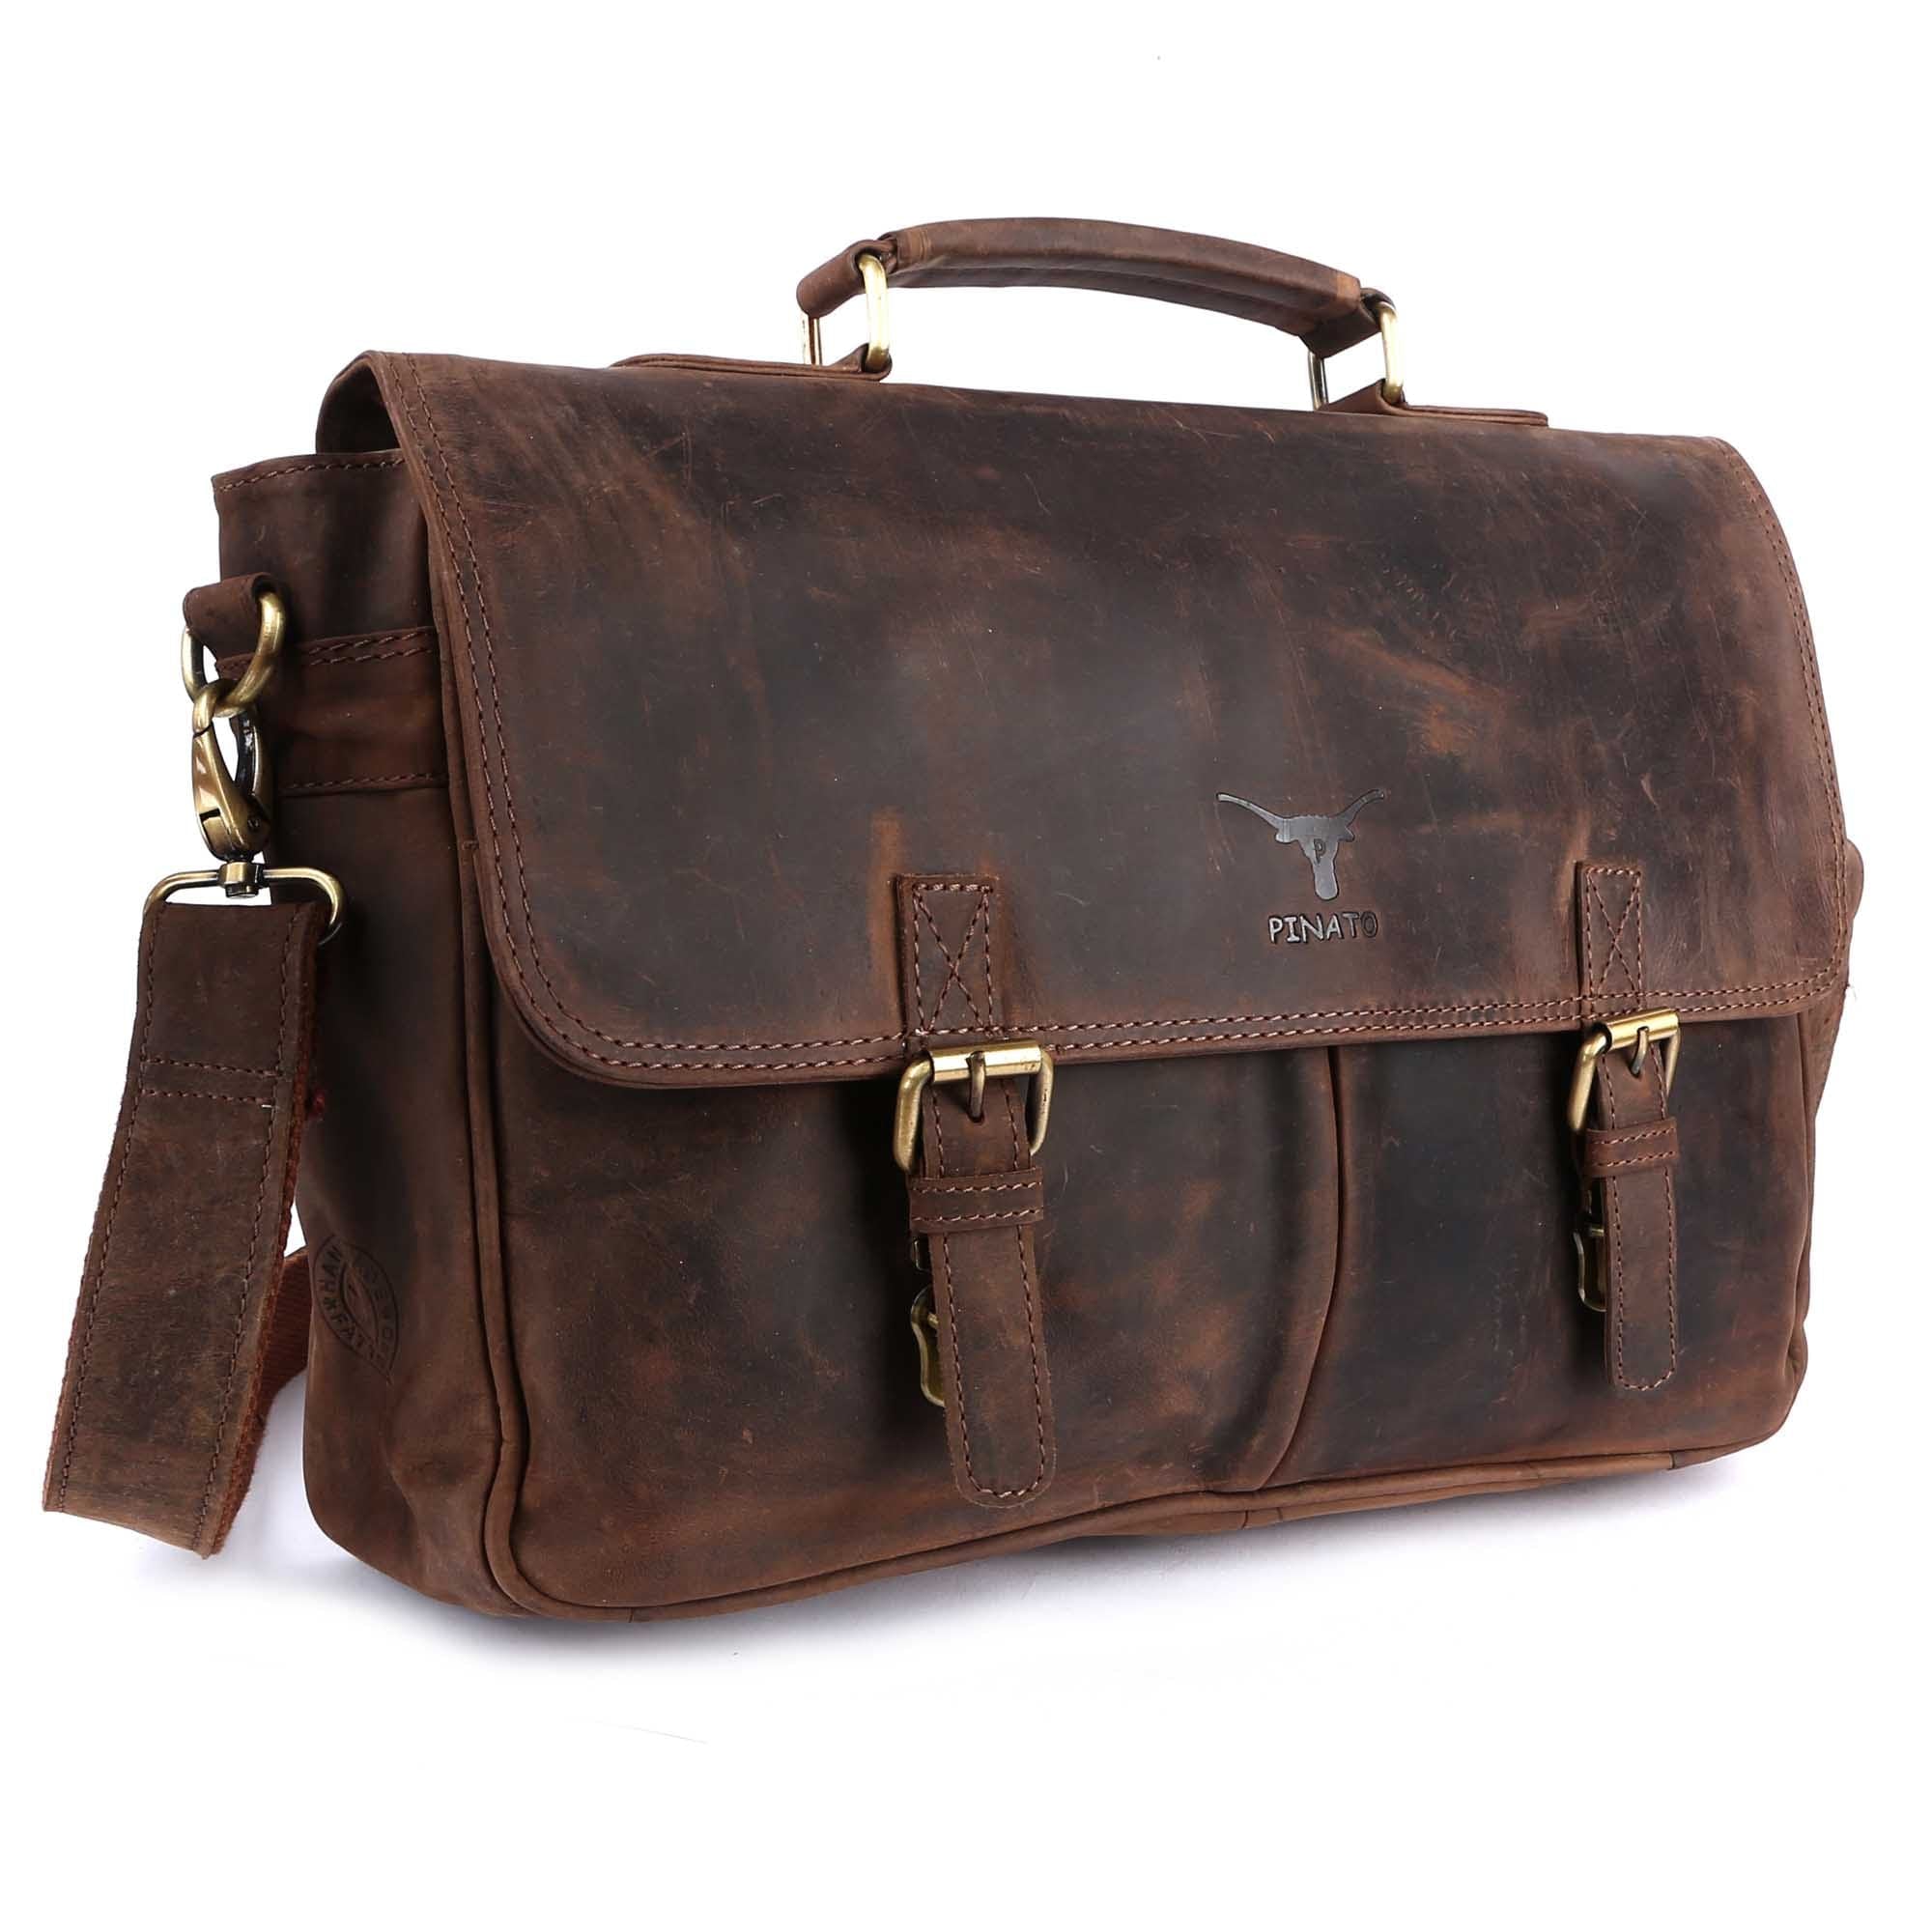 Pinato Genuine Leather Cognac Briefcase, Portfolio, Messenger Bag for Men & Women (PL-5118)